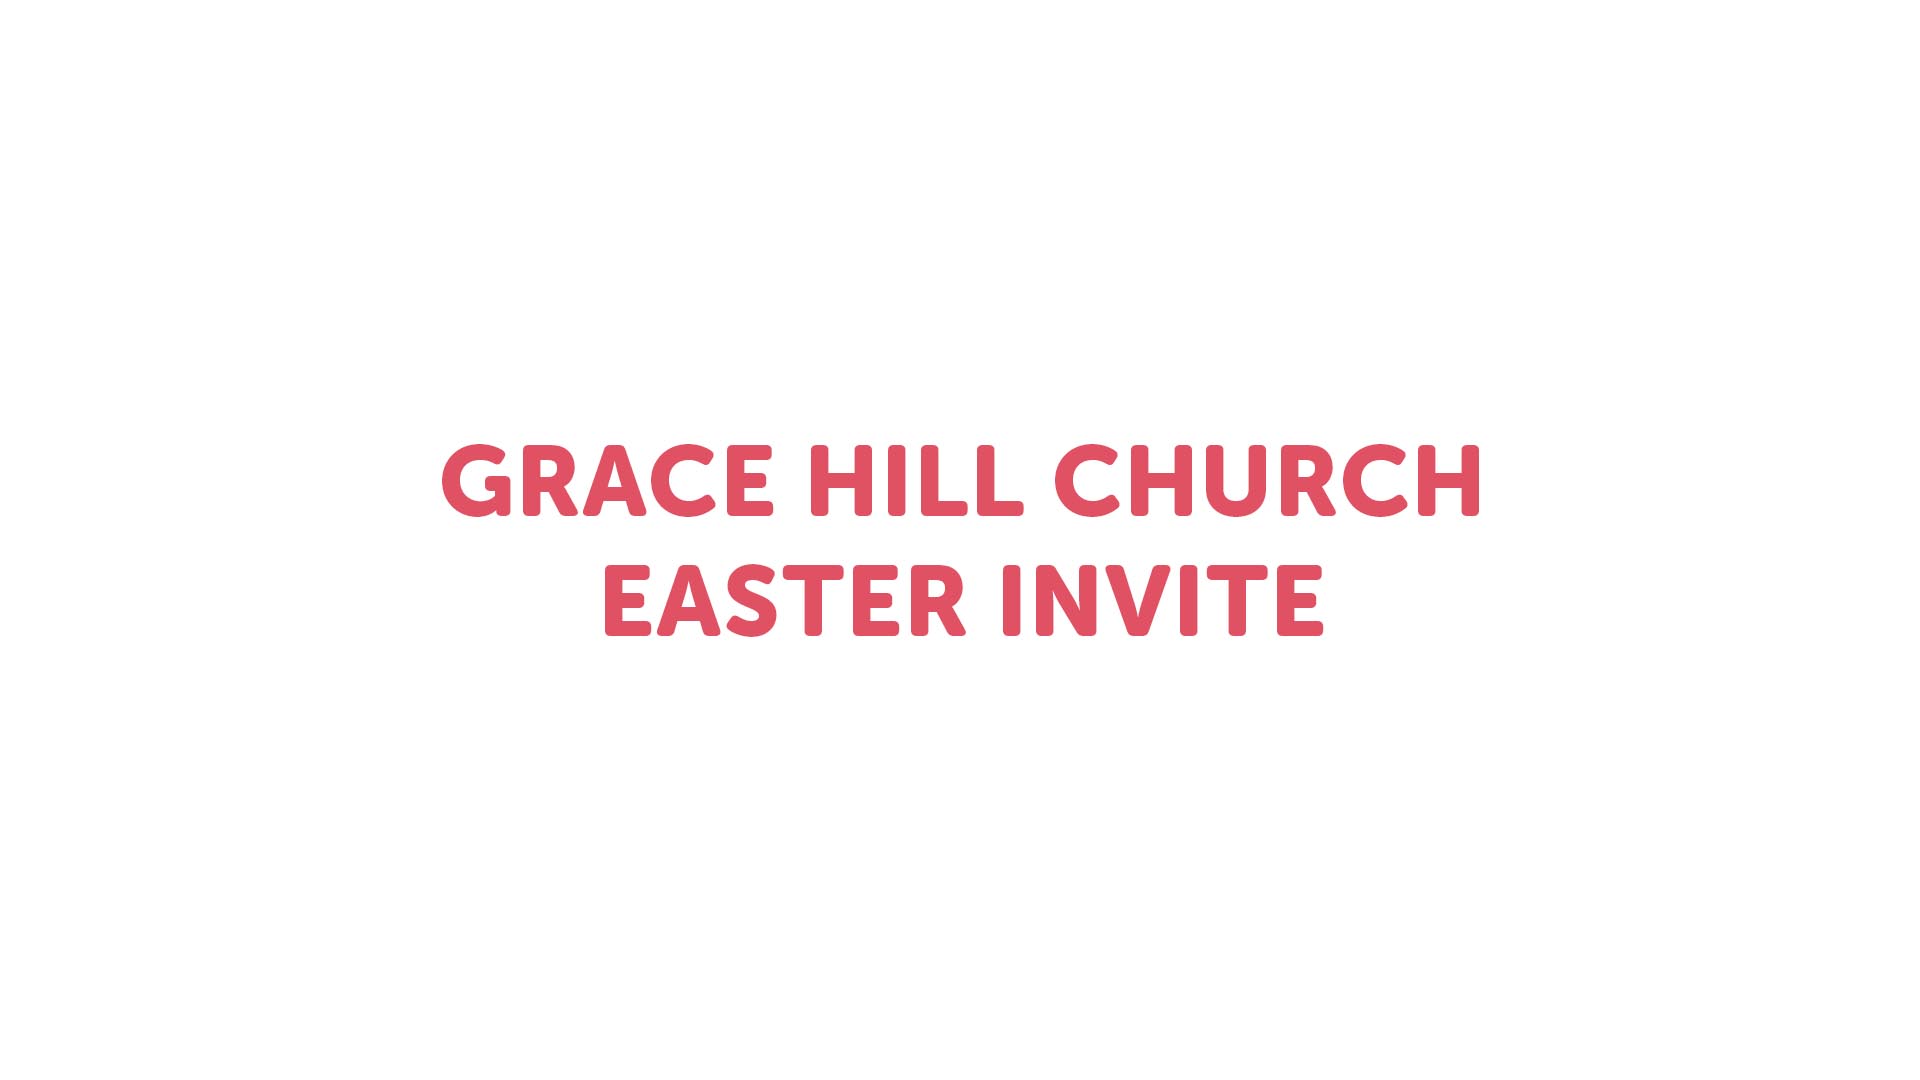 Grace Hill Church Easter Invite 2019